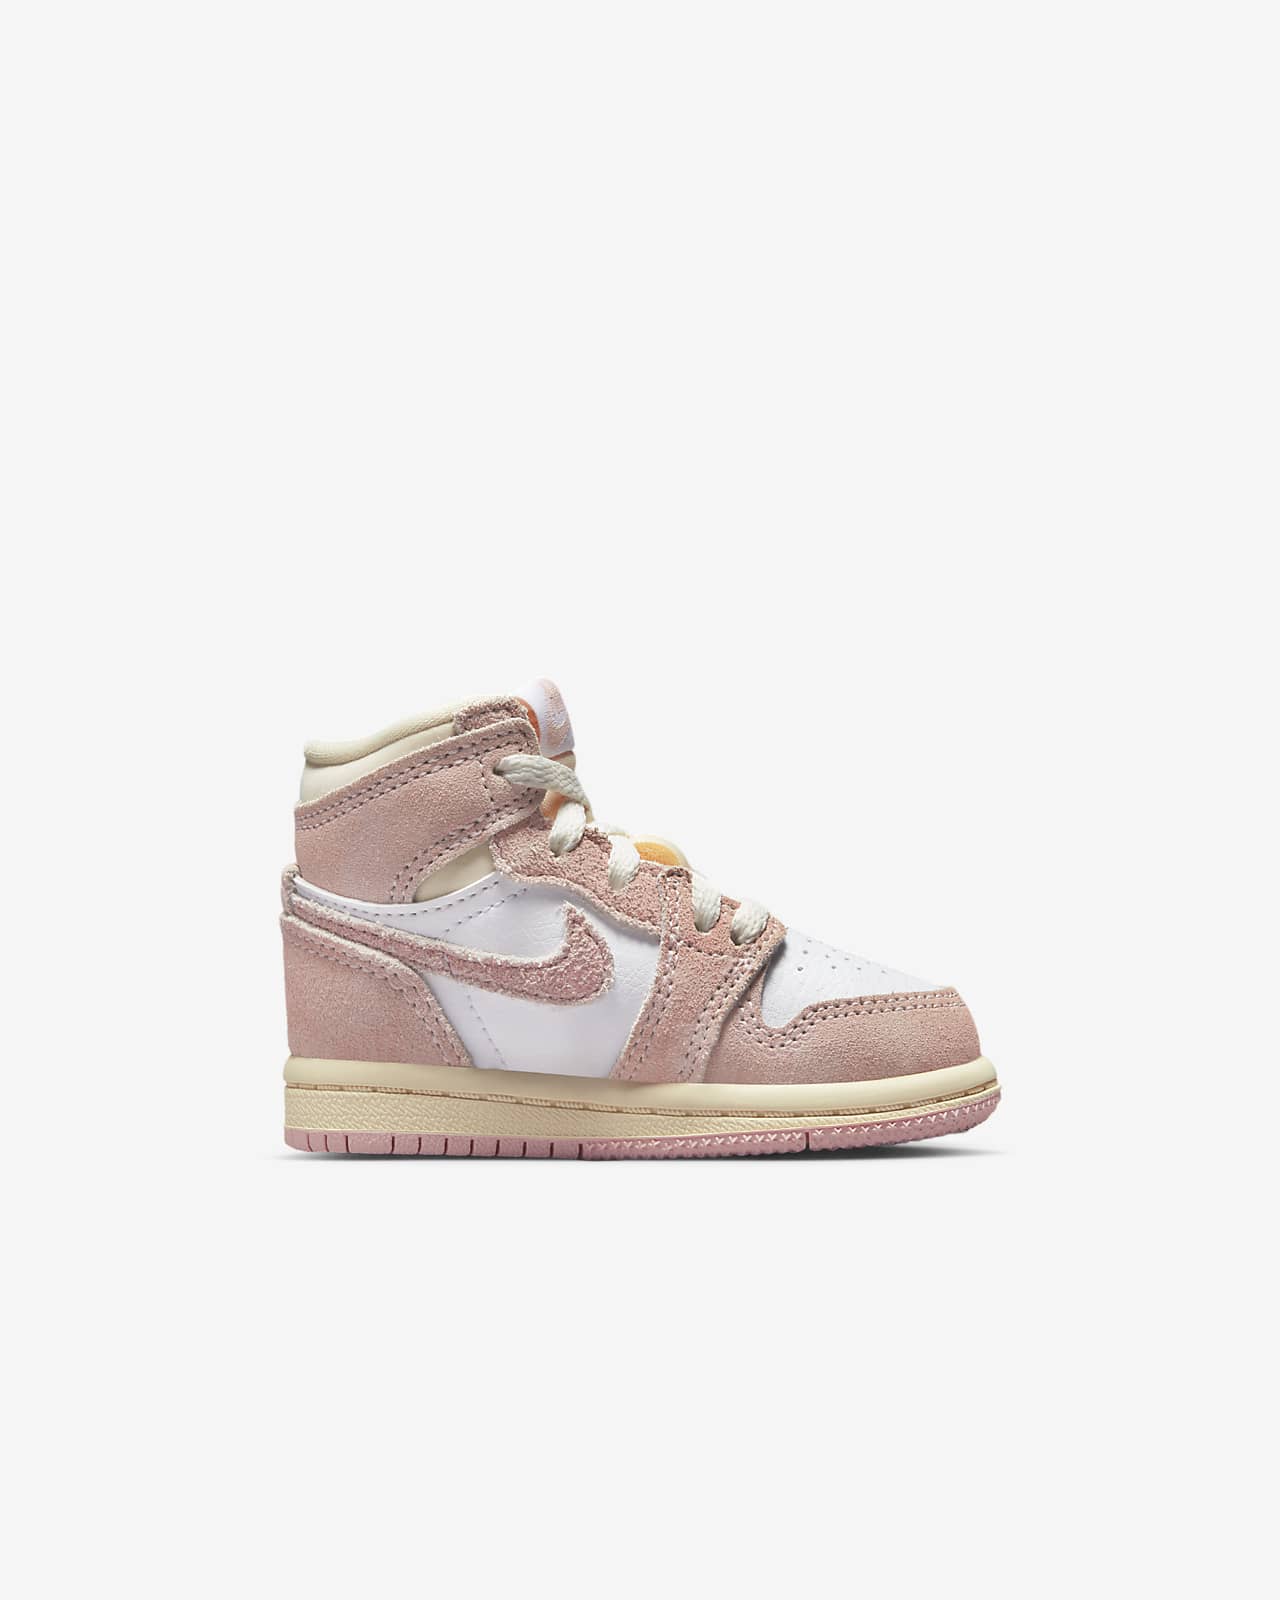 Zeg opzij dichtbij Verovering Jordan 1 Retro High OG Baby/Toddler Shoes. Nike.com